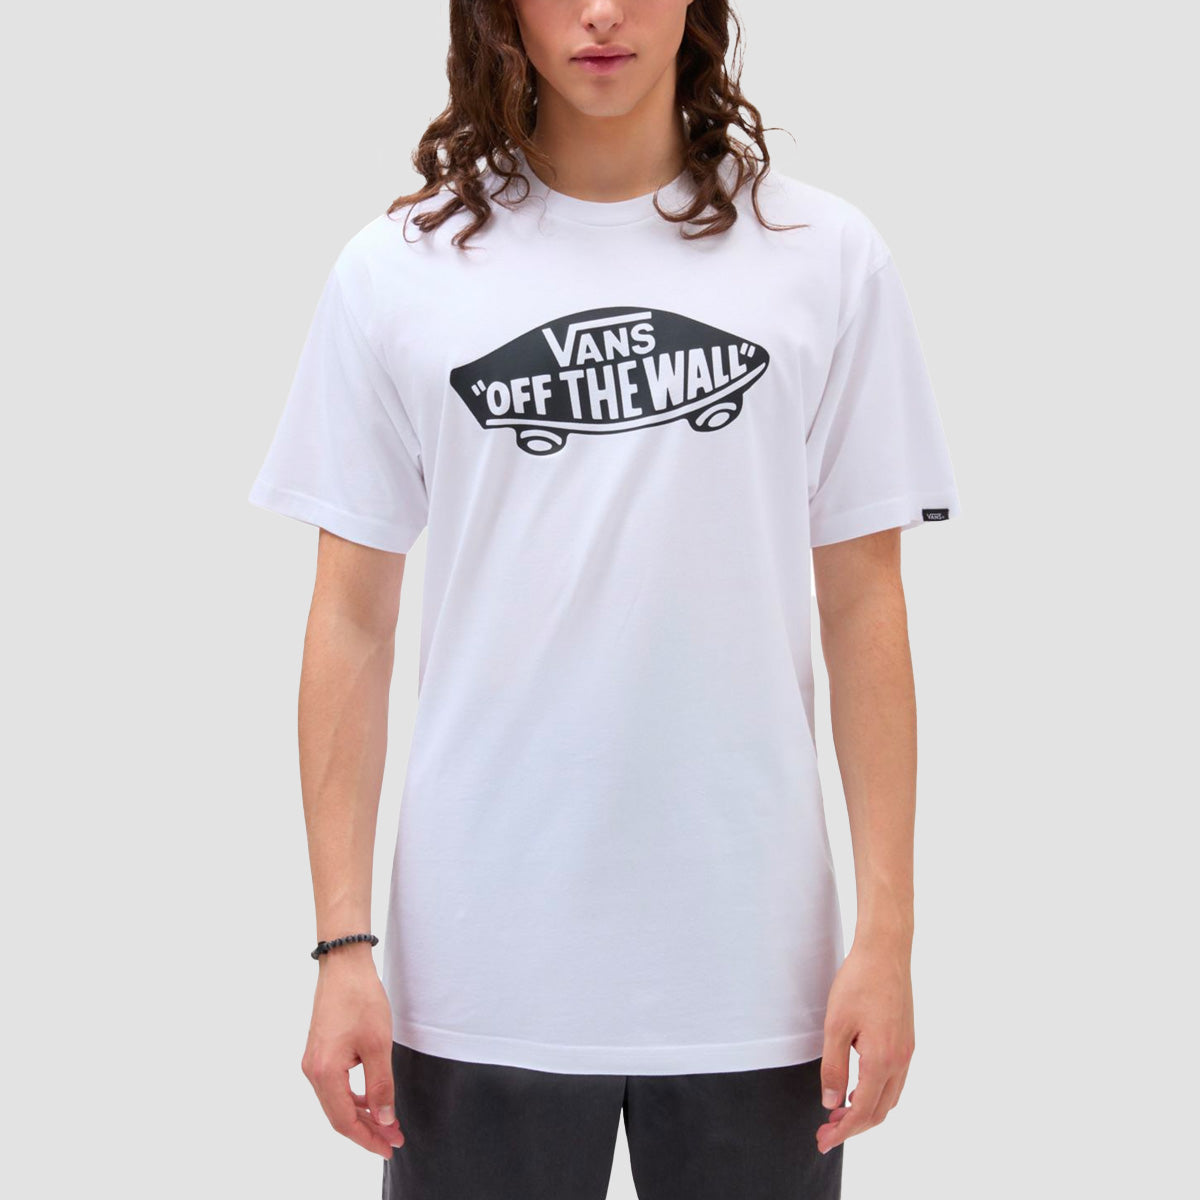 Vans OTW Board B T-Shirt White/Black